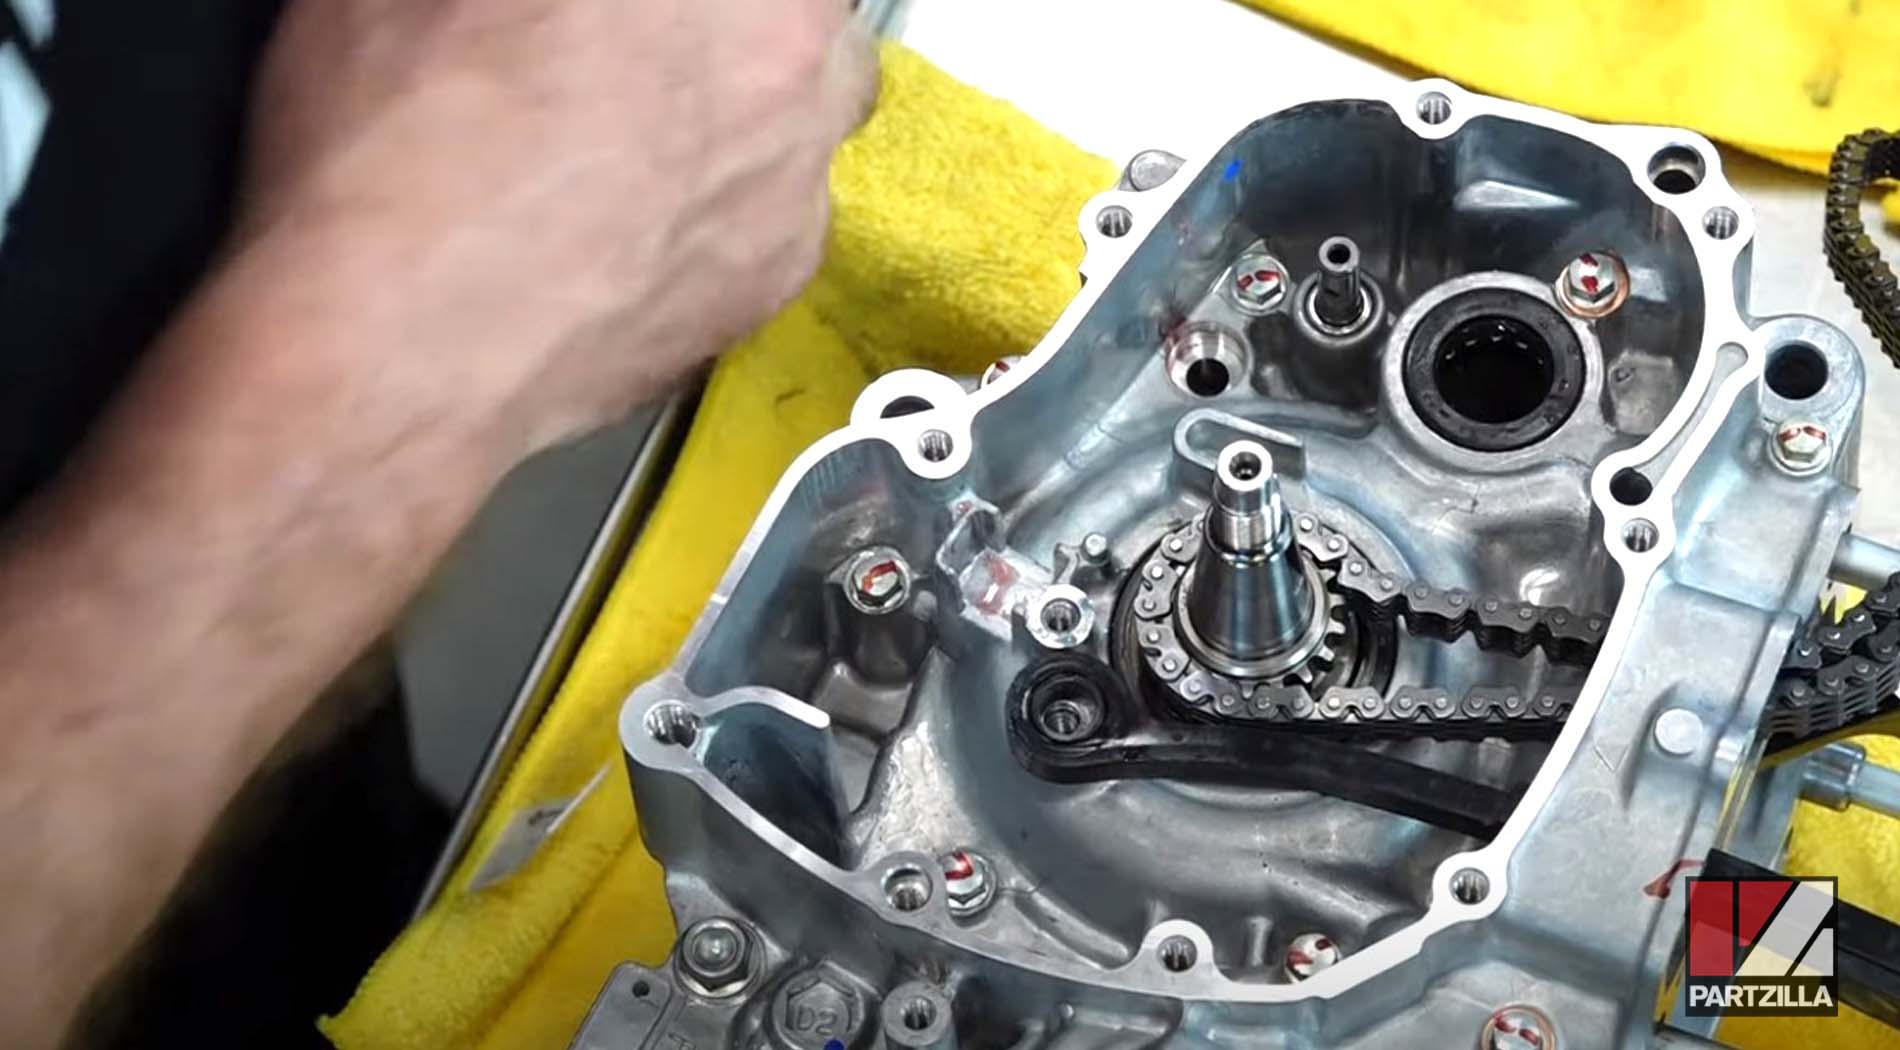 Honda CRF450 engine rebuild timing chain install